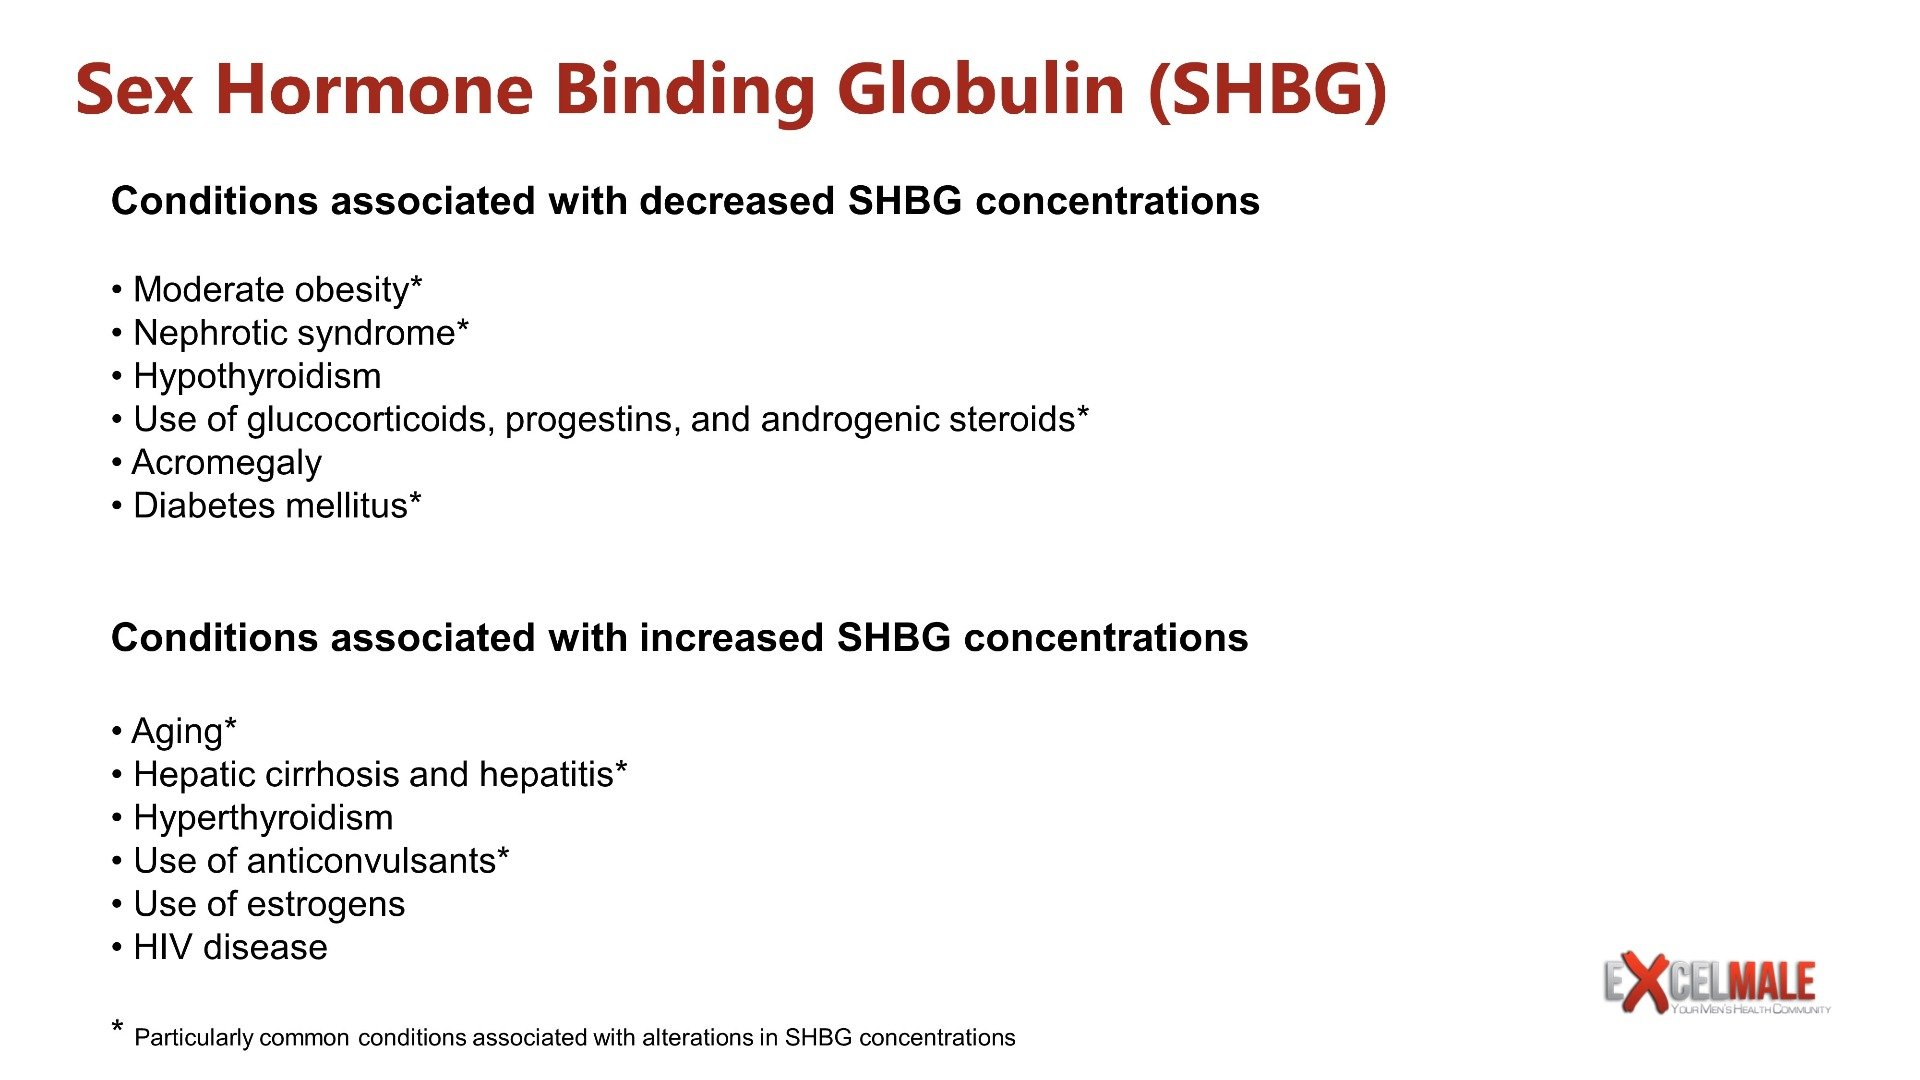 Factors that increase and decrease SHBG